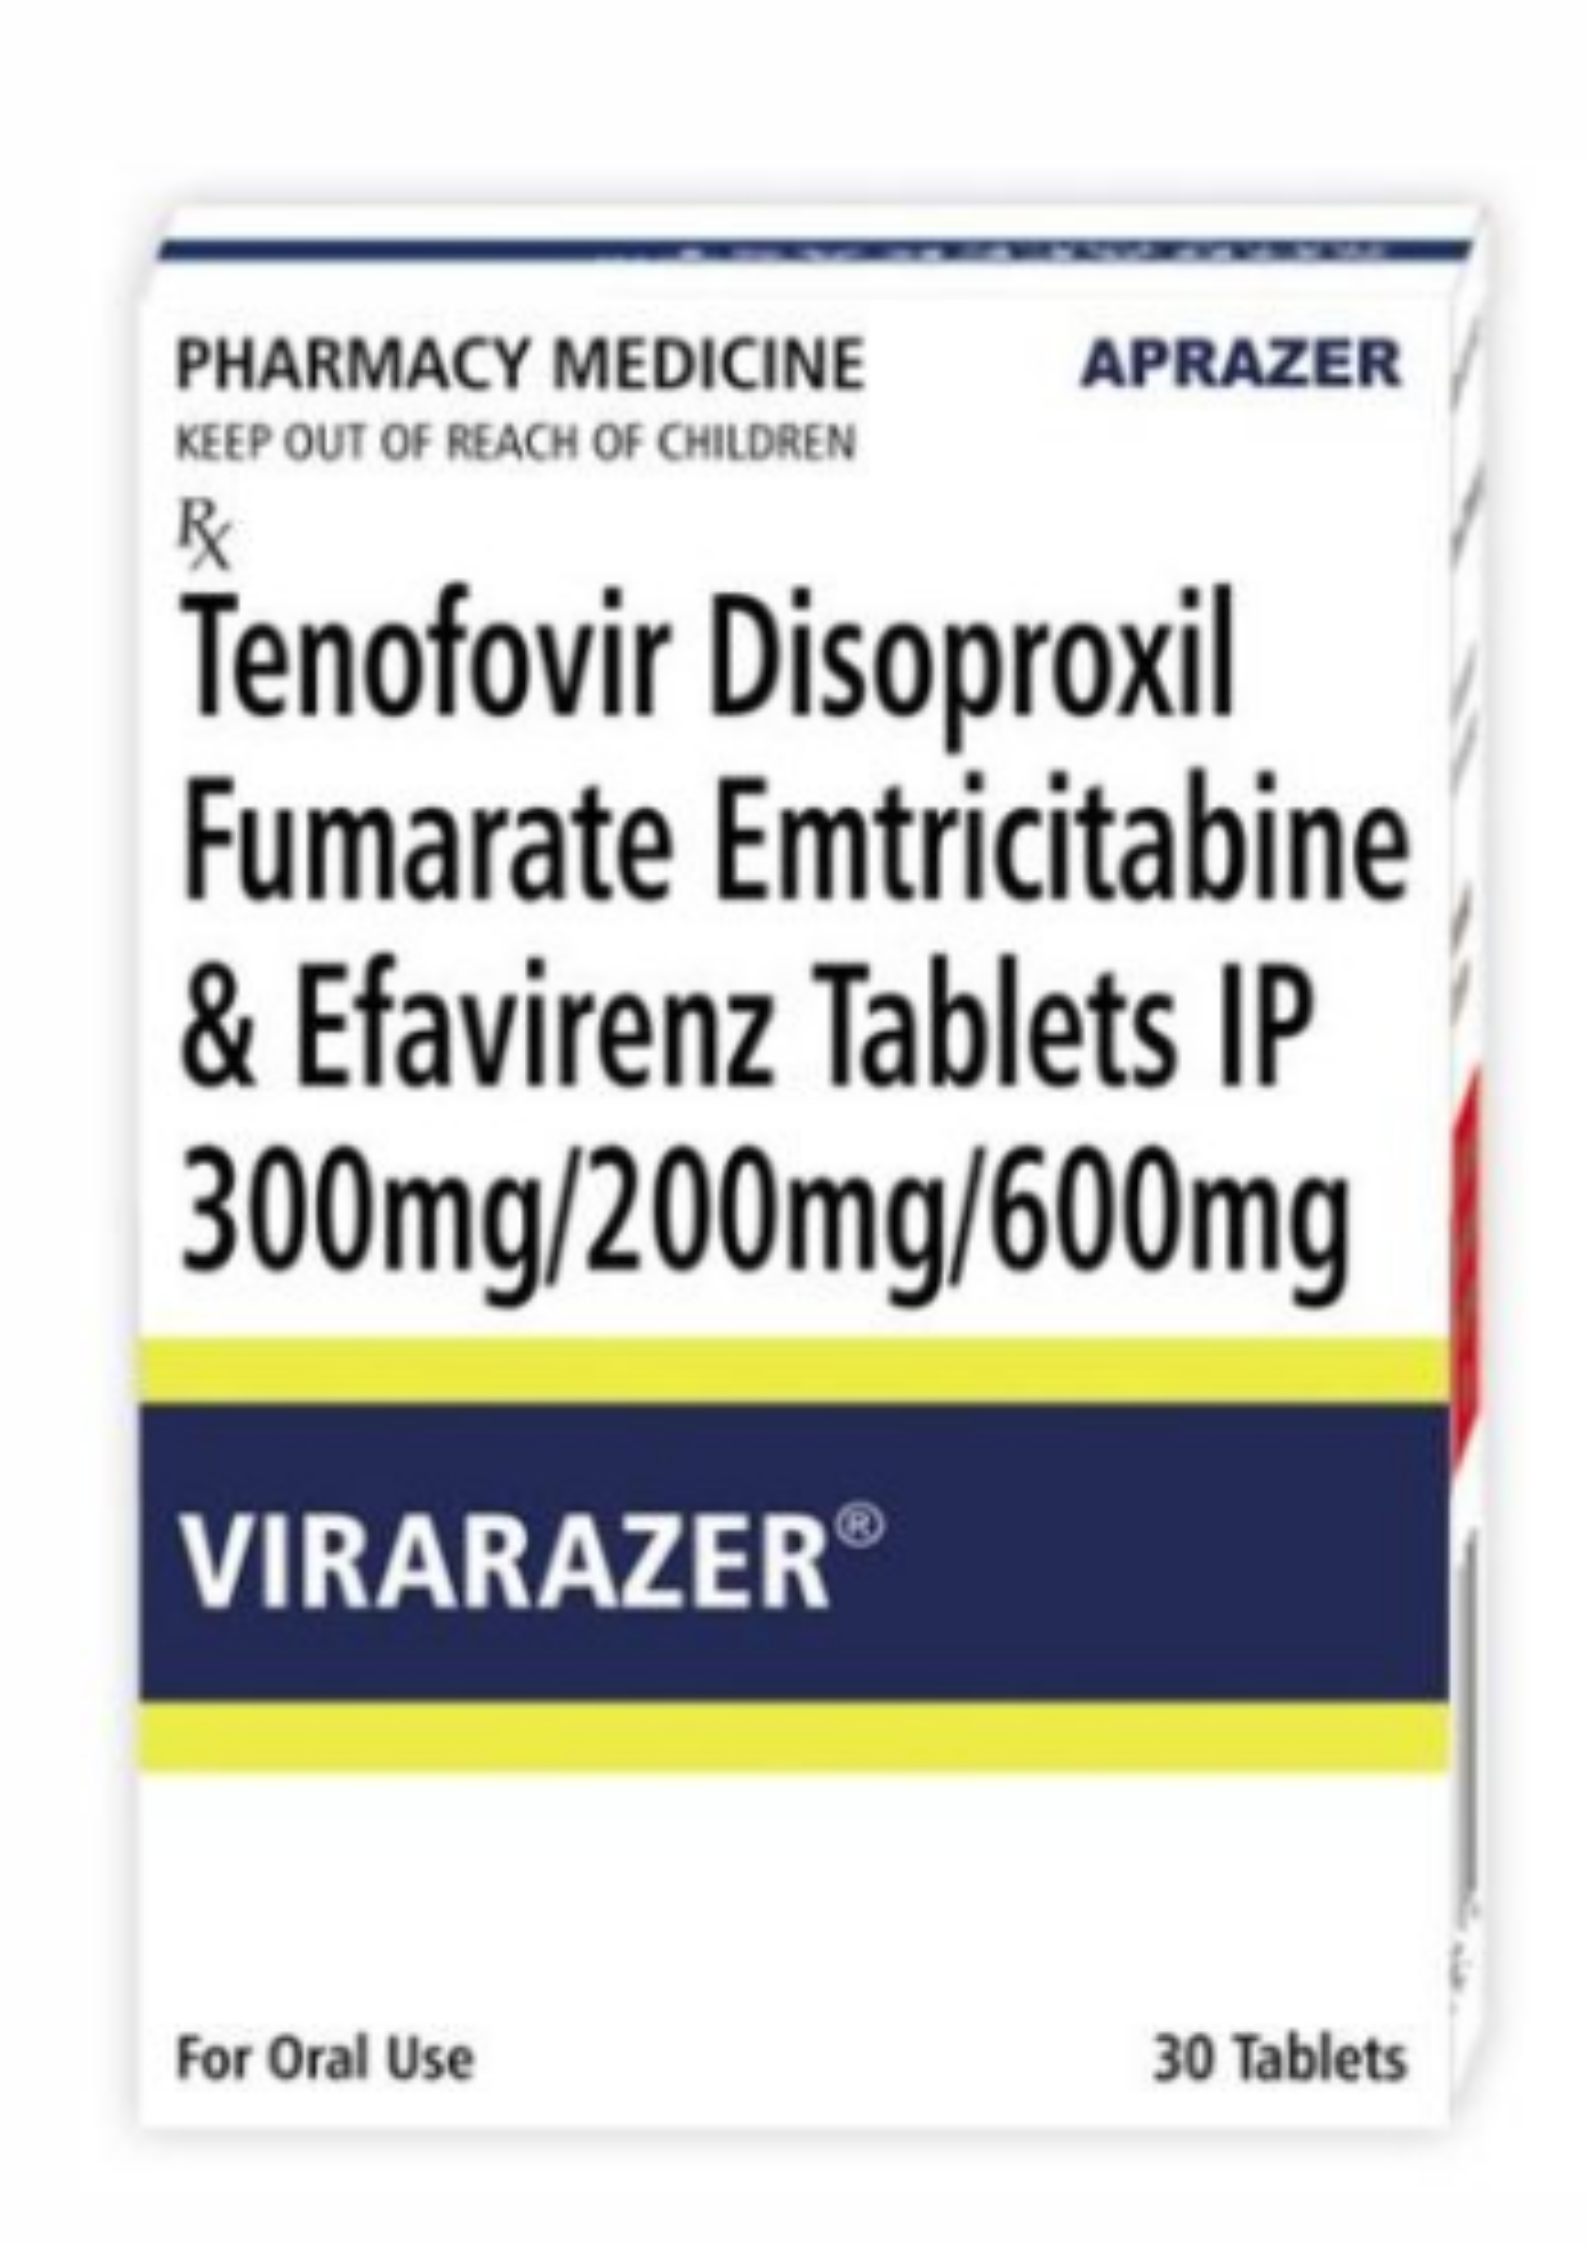 Virarazer Tablets Aprazer